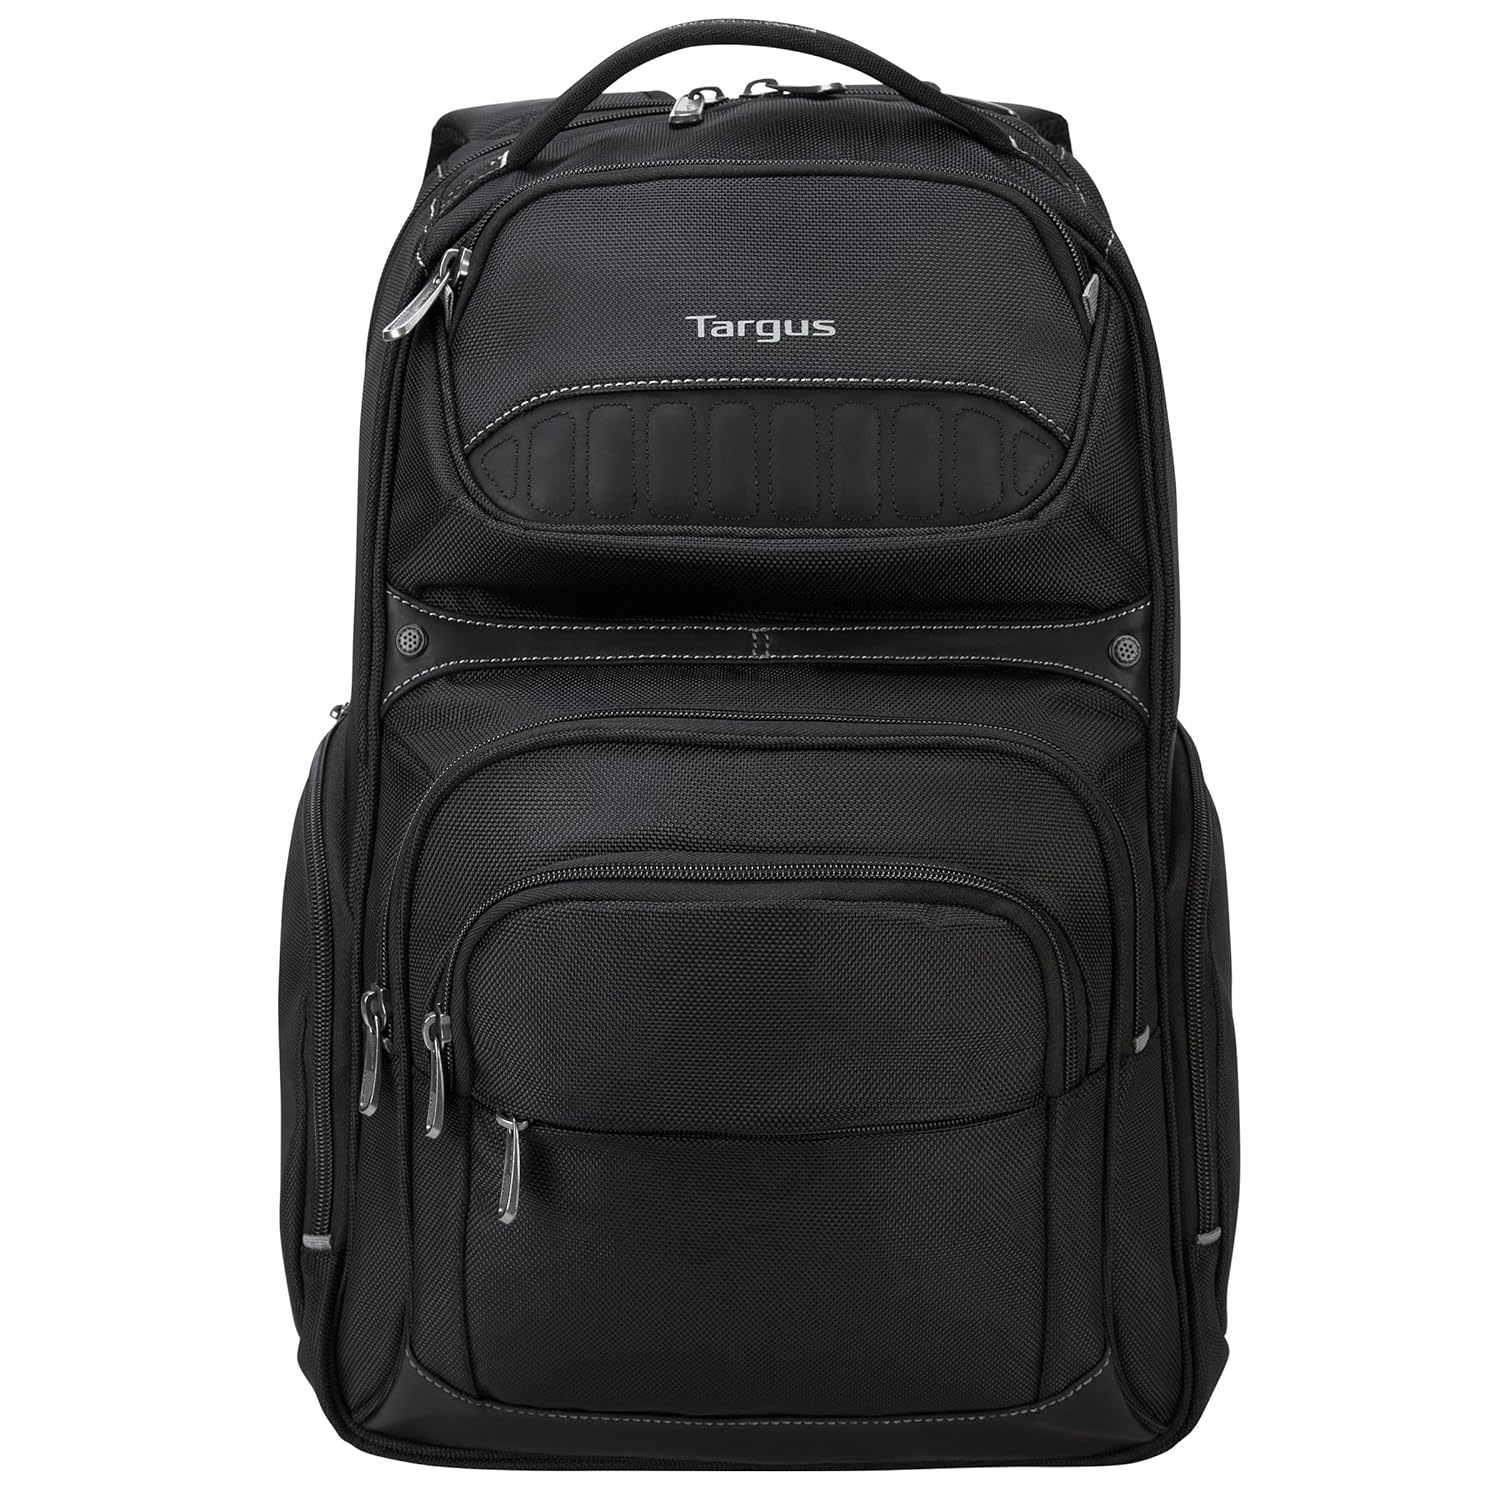 Targus Legend IQ Laptop Backpack Bag for Business Fits 16-Inch Laptop Profession - $54.99